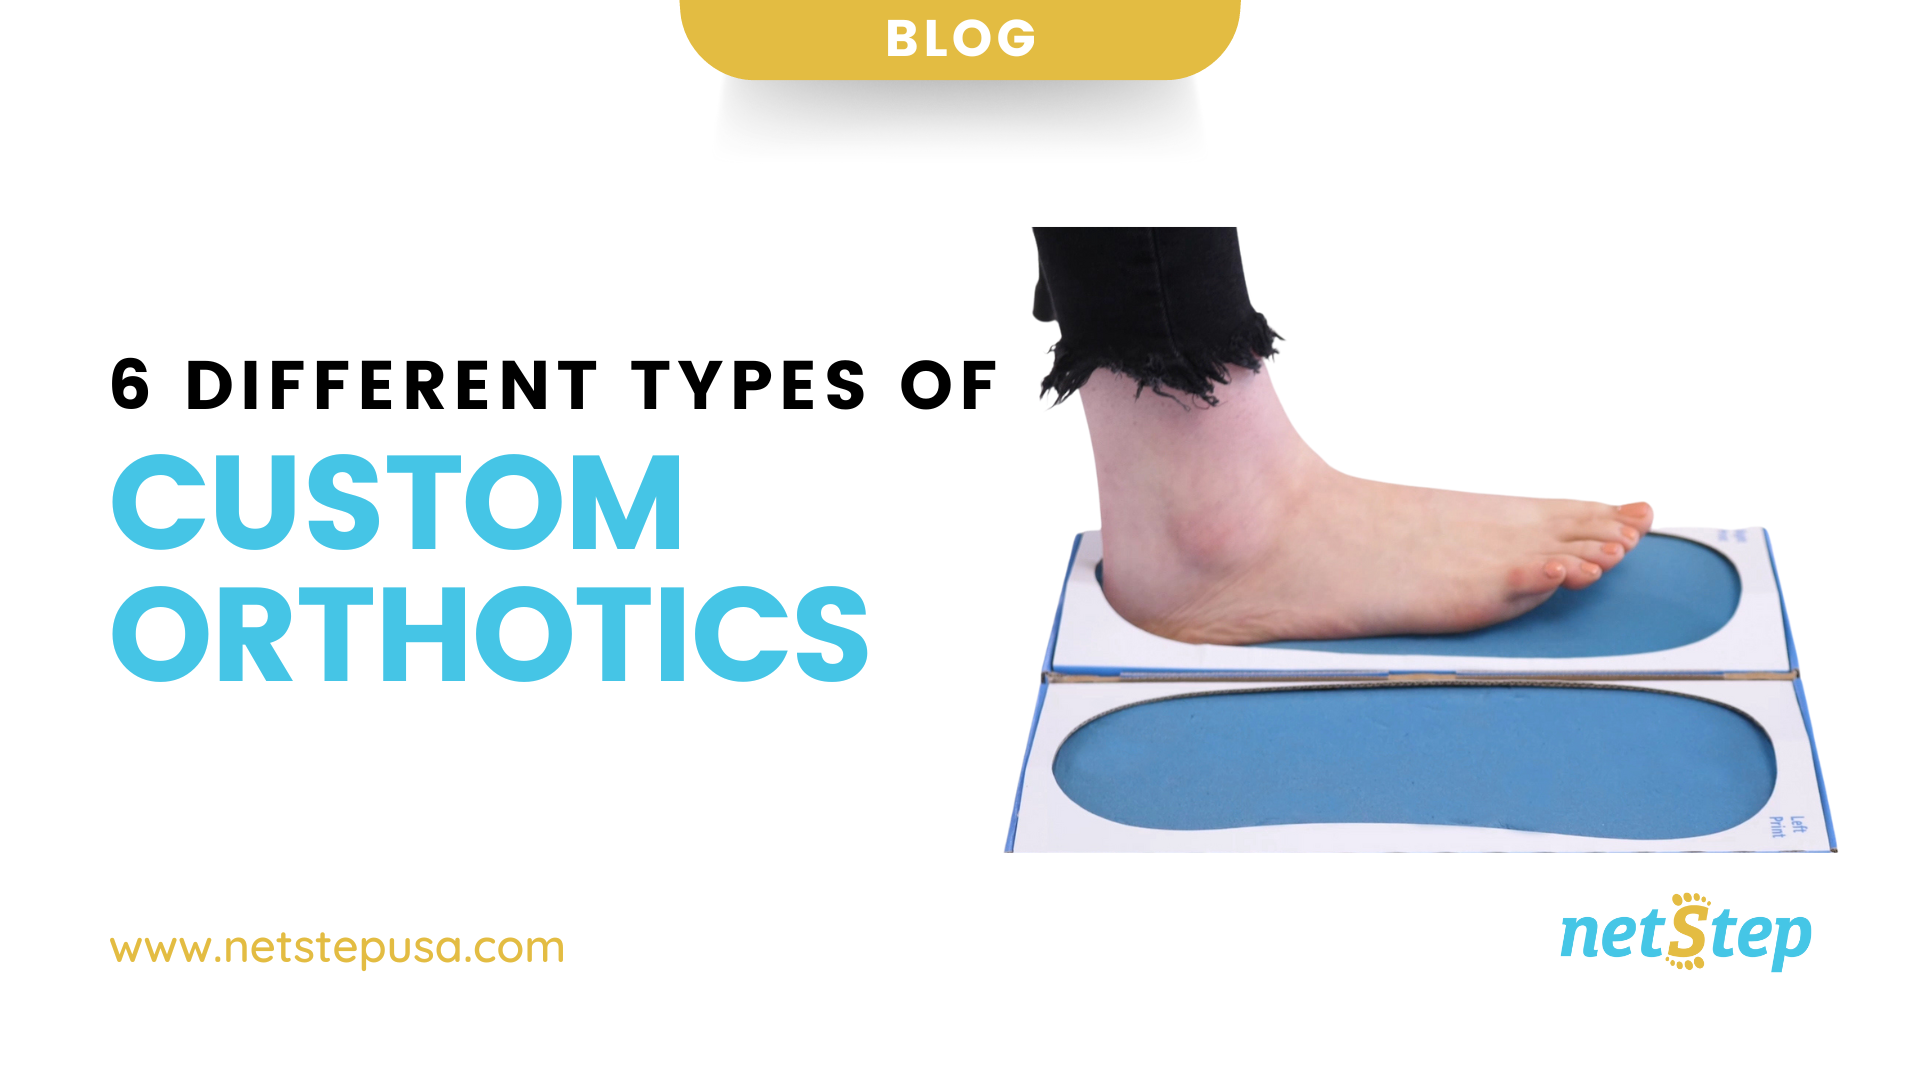 6 Different Types of Custom Orthotics